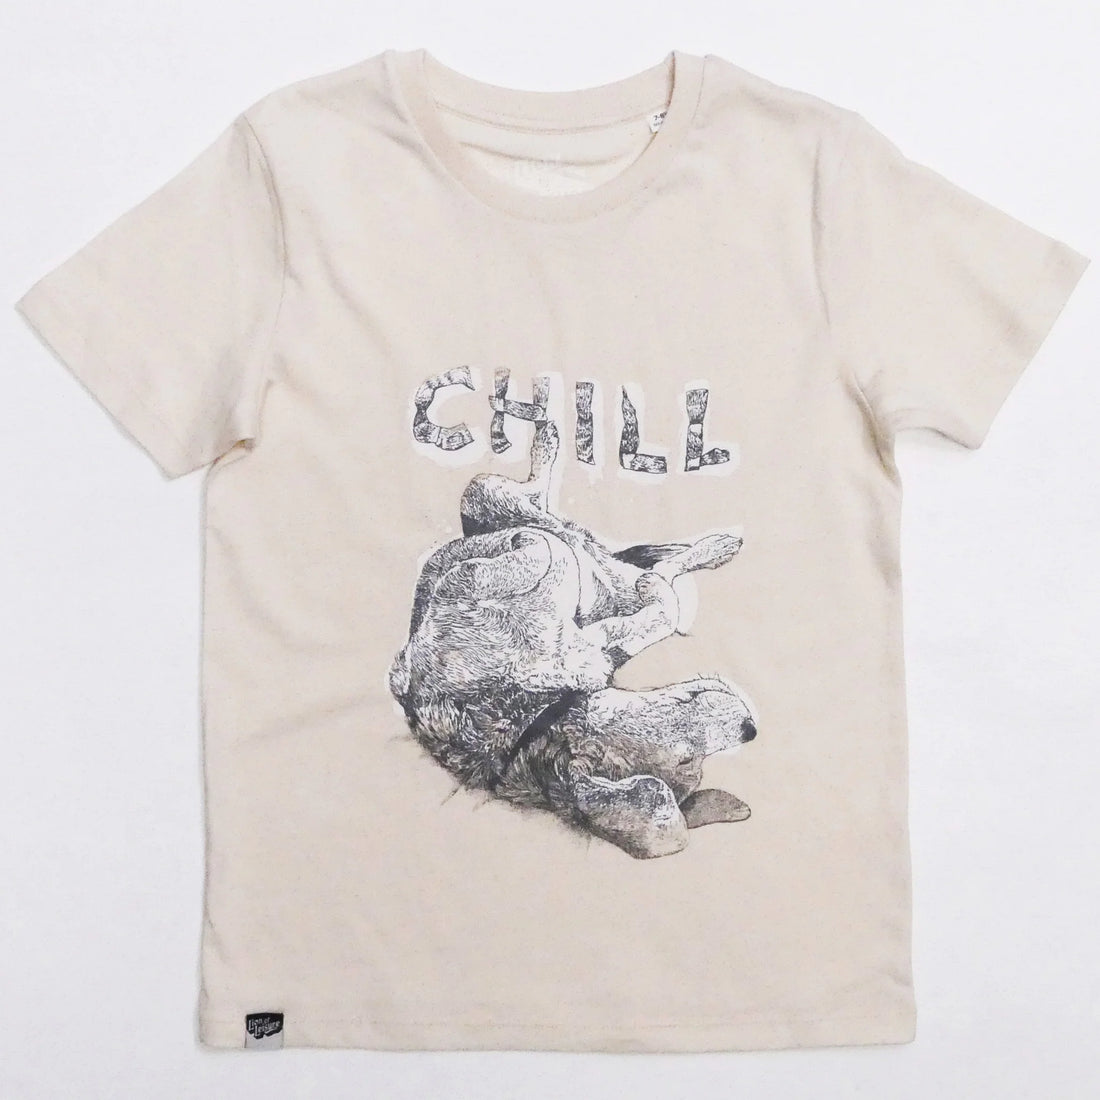 Lion of Leisure - Kinder T-Shirt Beagle chill natur